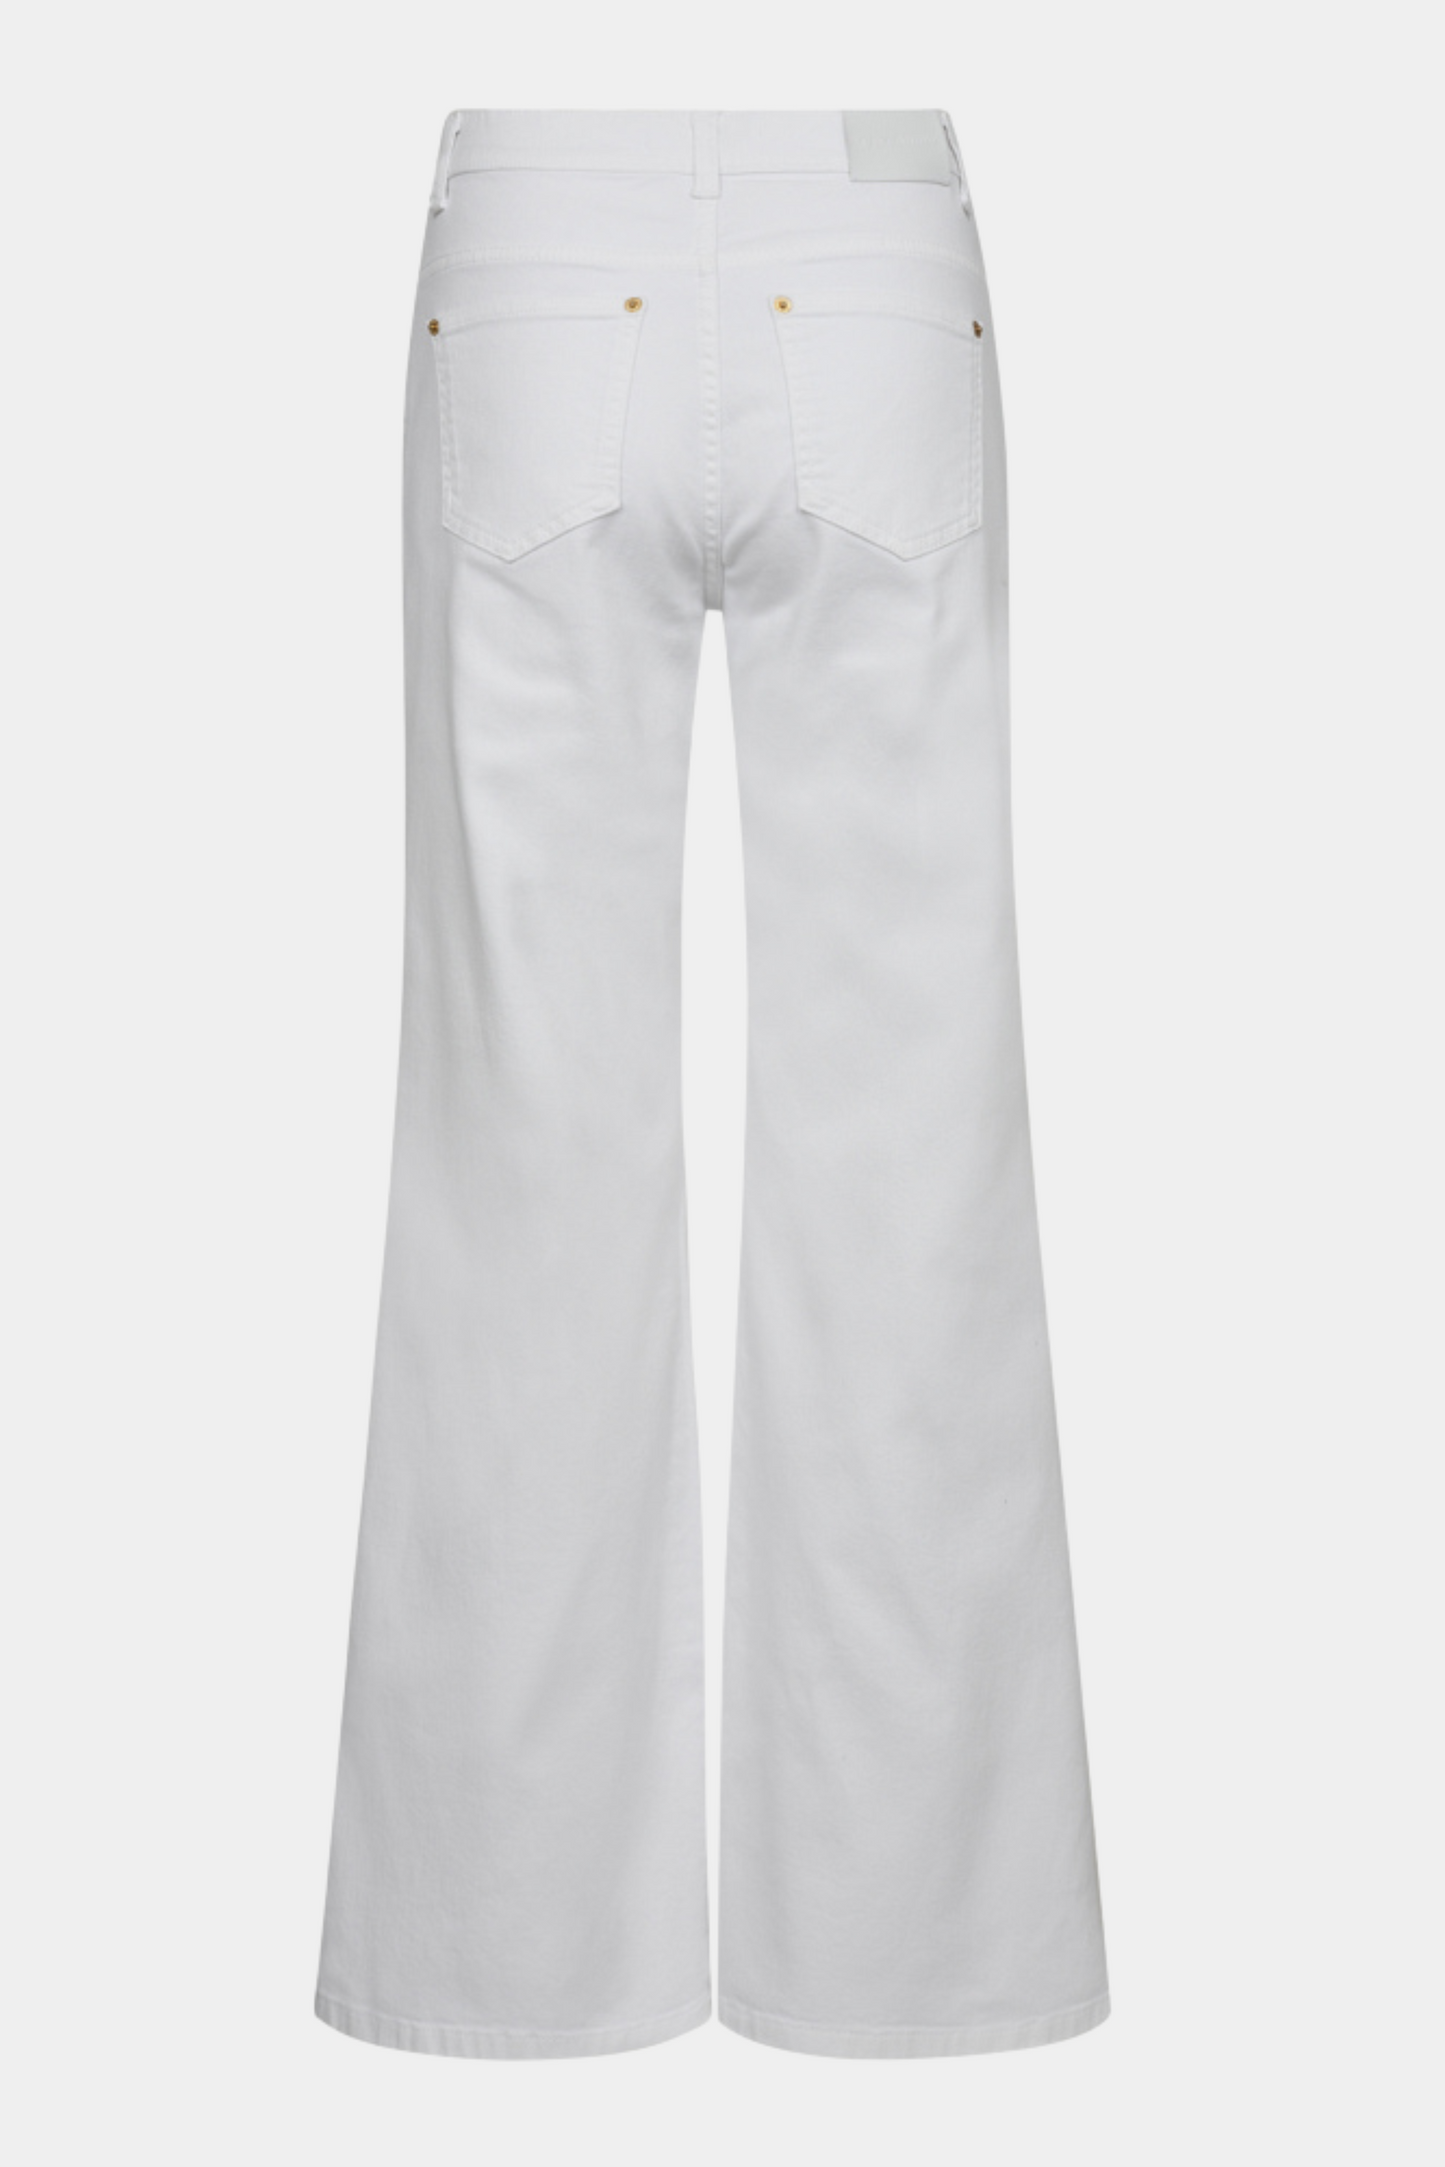 DoryCC white jeans